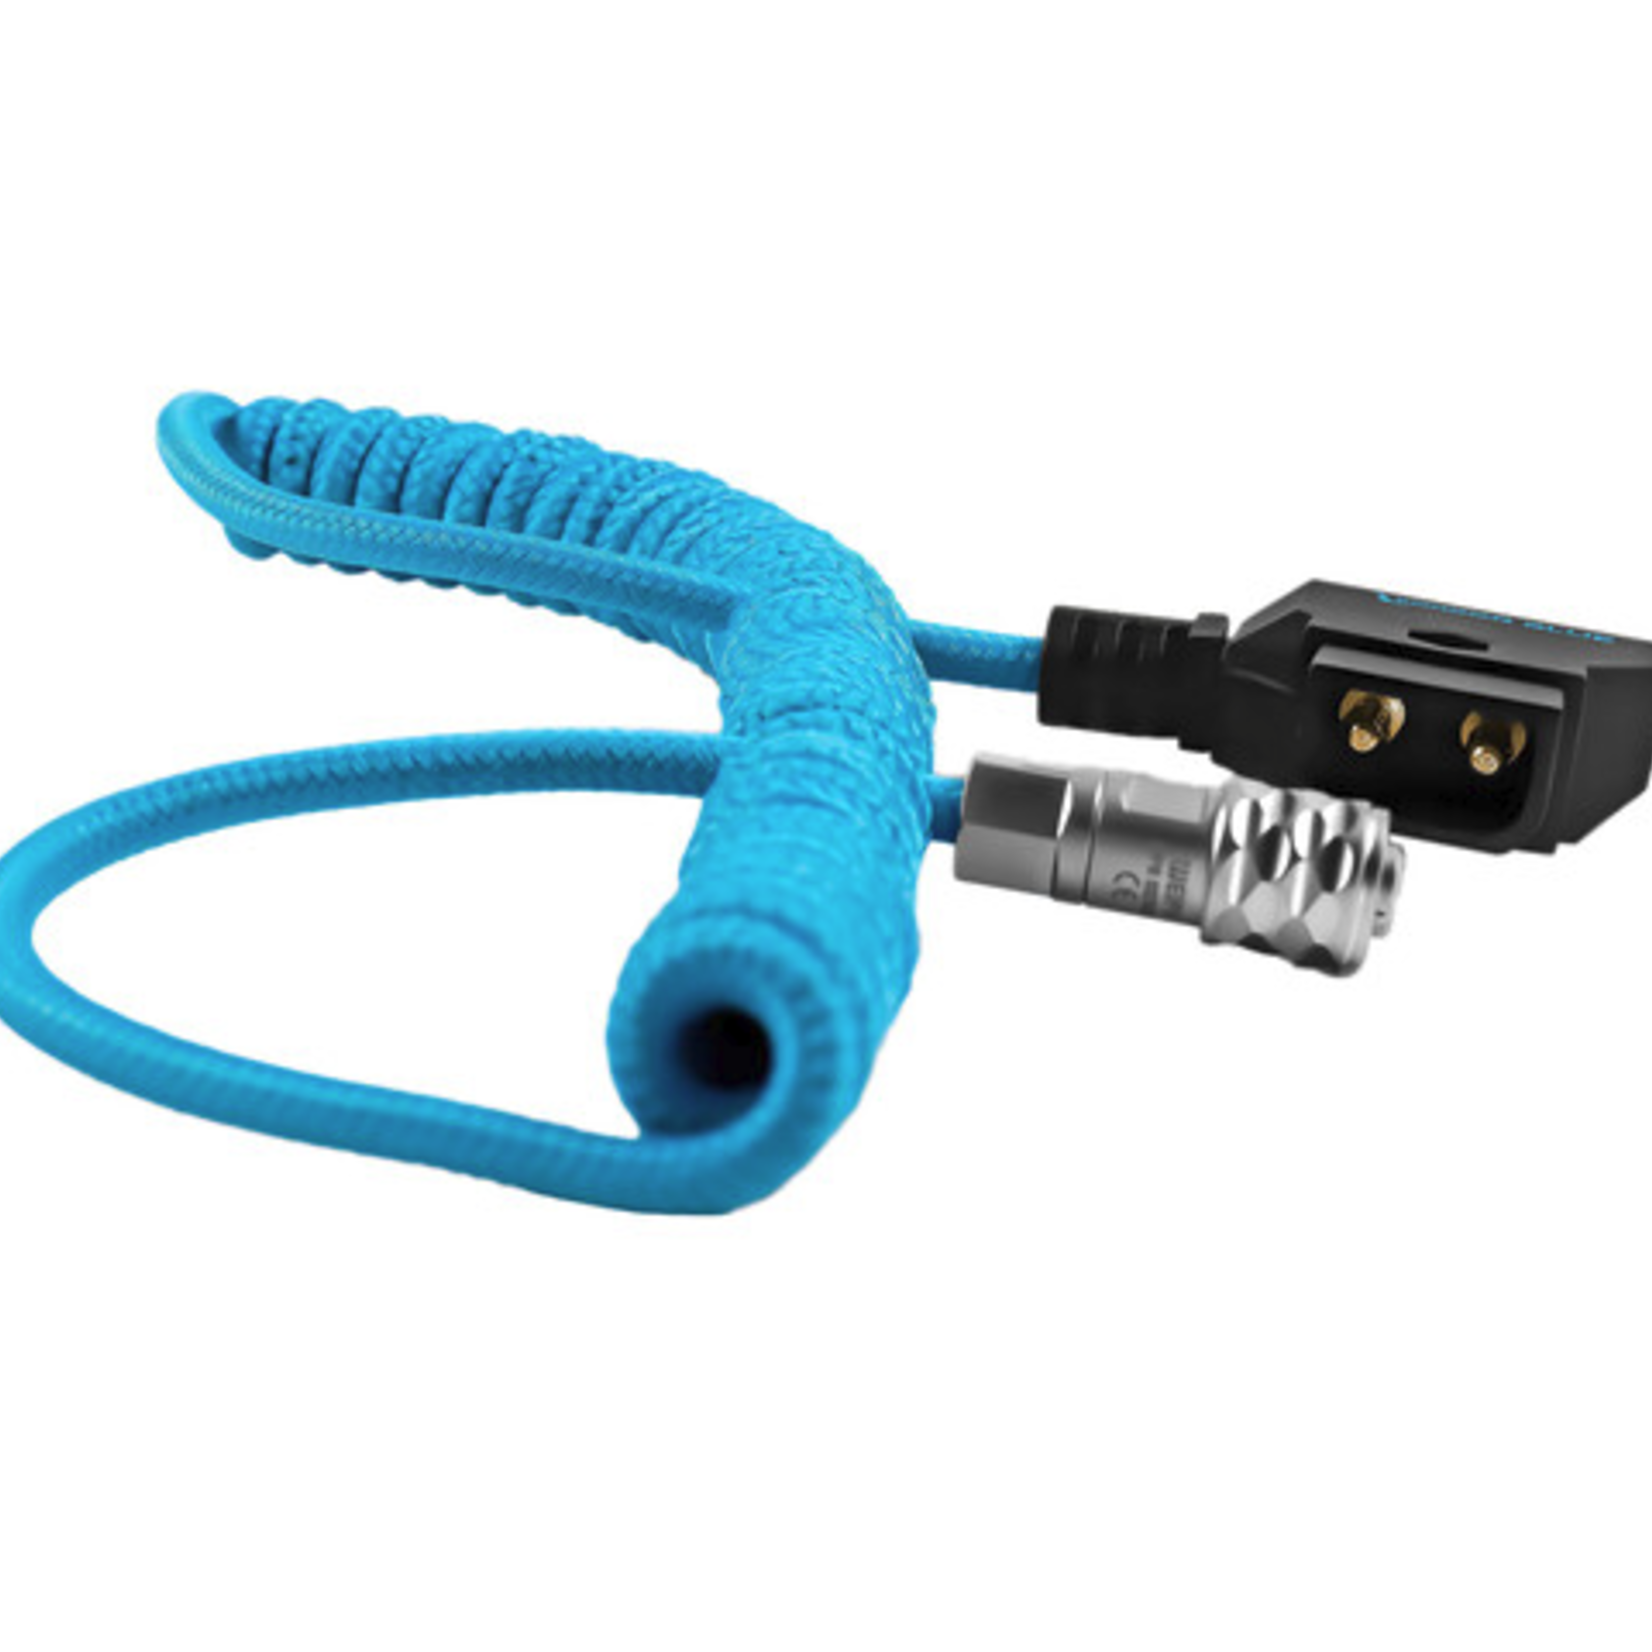 Kondor Blue Kondor Blue Coiled D-Tap to 2-Pin Power Cable for BMPCC 6K/4K (Blue)